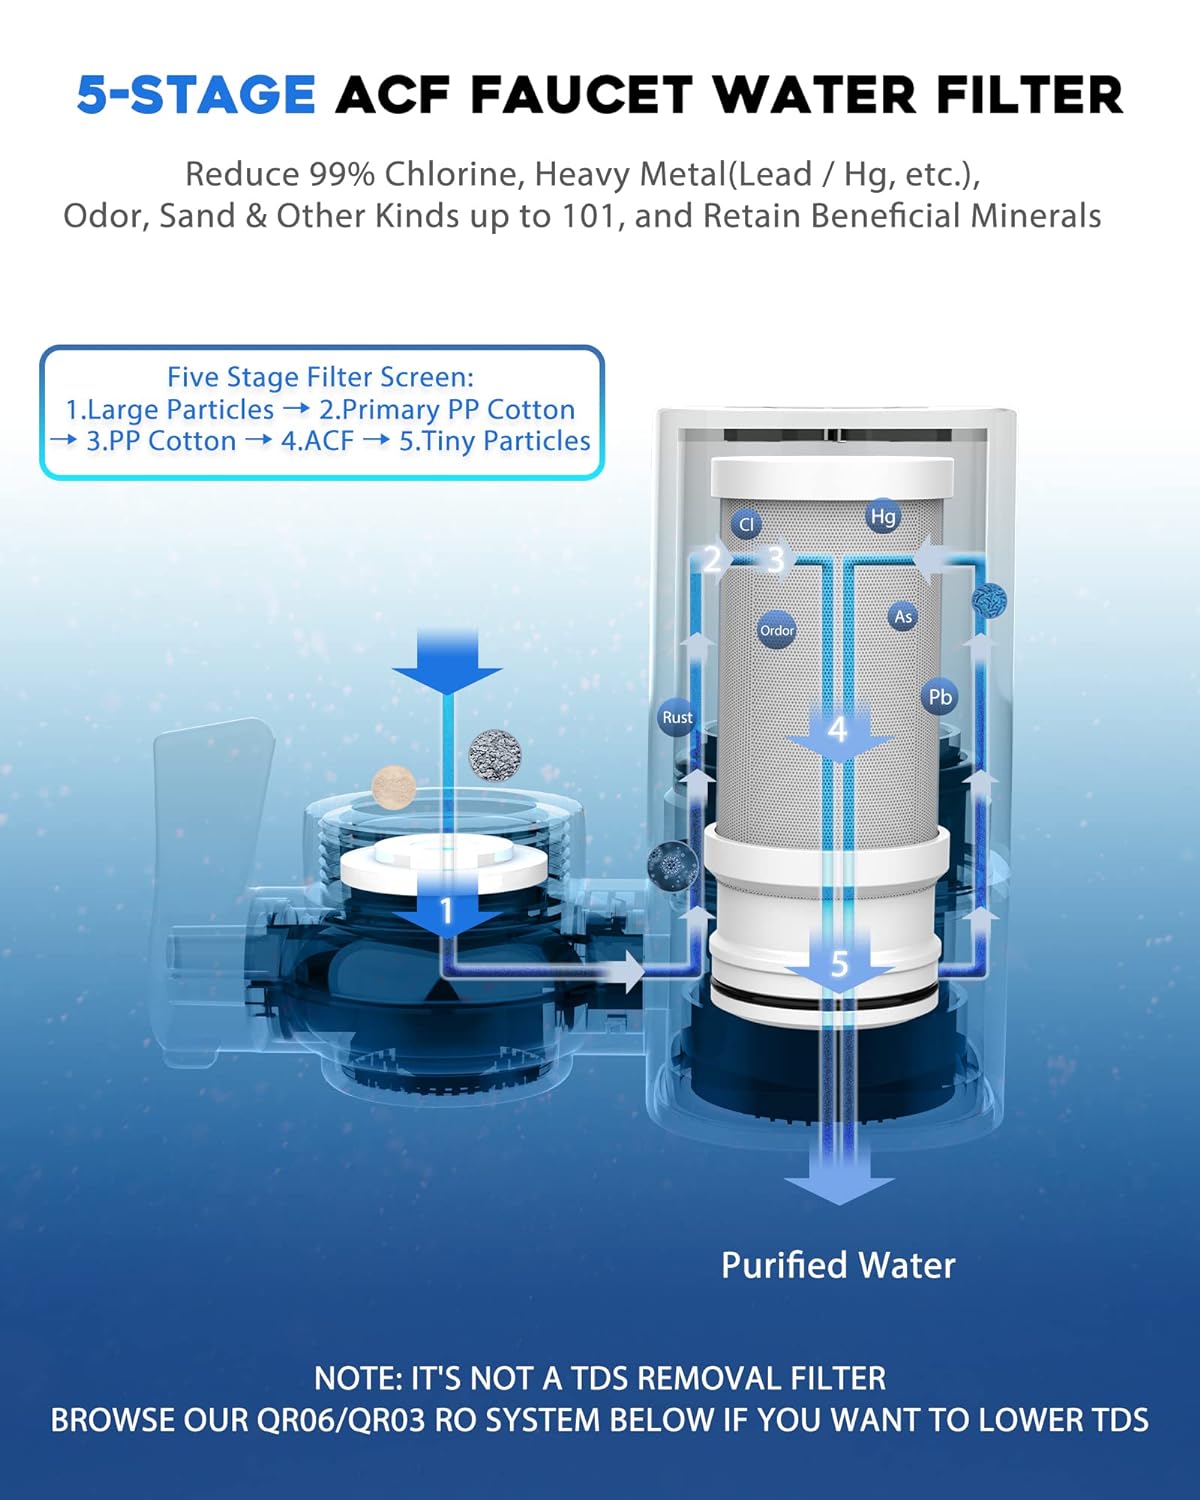 Generic Vortopt T1 Faucet Water Filter - 400 Gallons Water Purifier for Faucet - Tap Water Filter Reduces Lead, Chlorine, Bad Odor